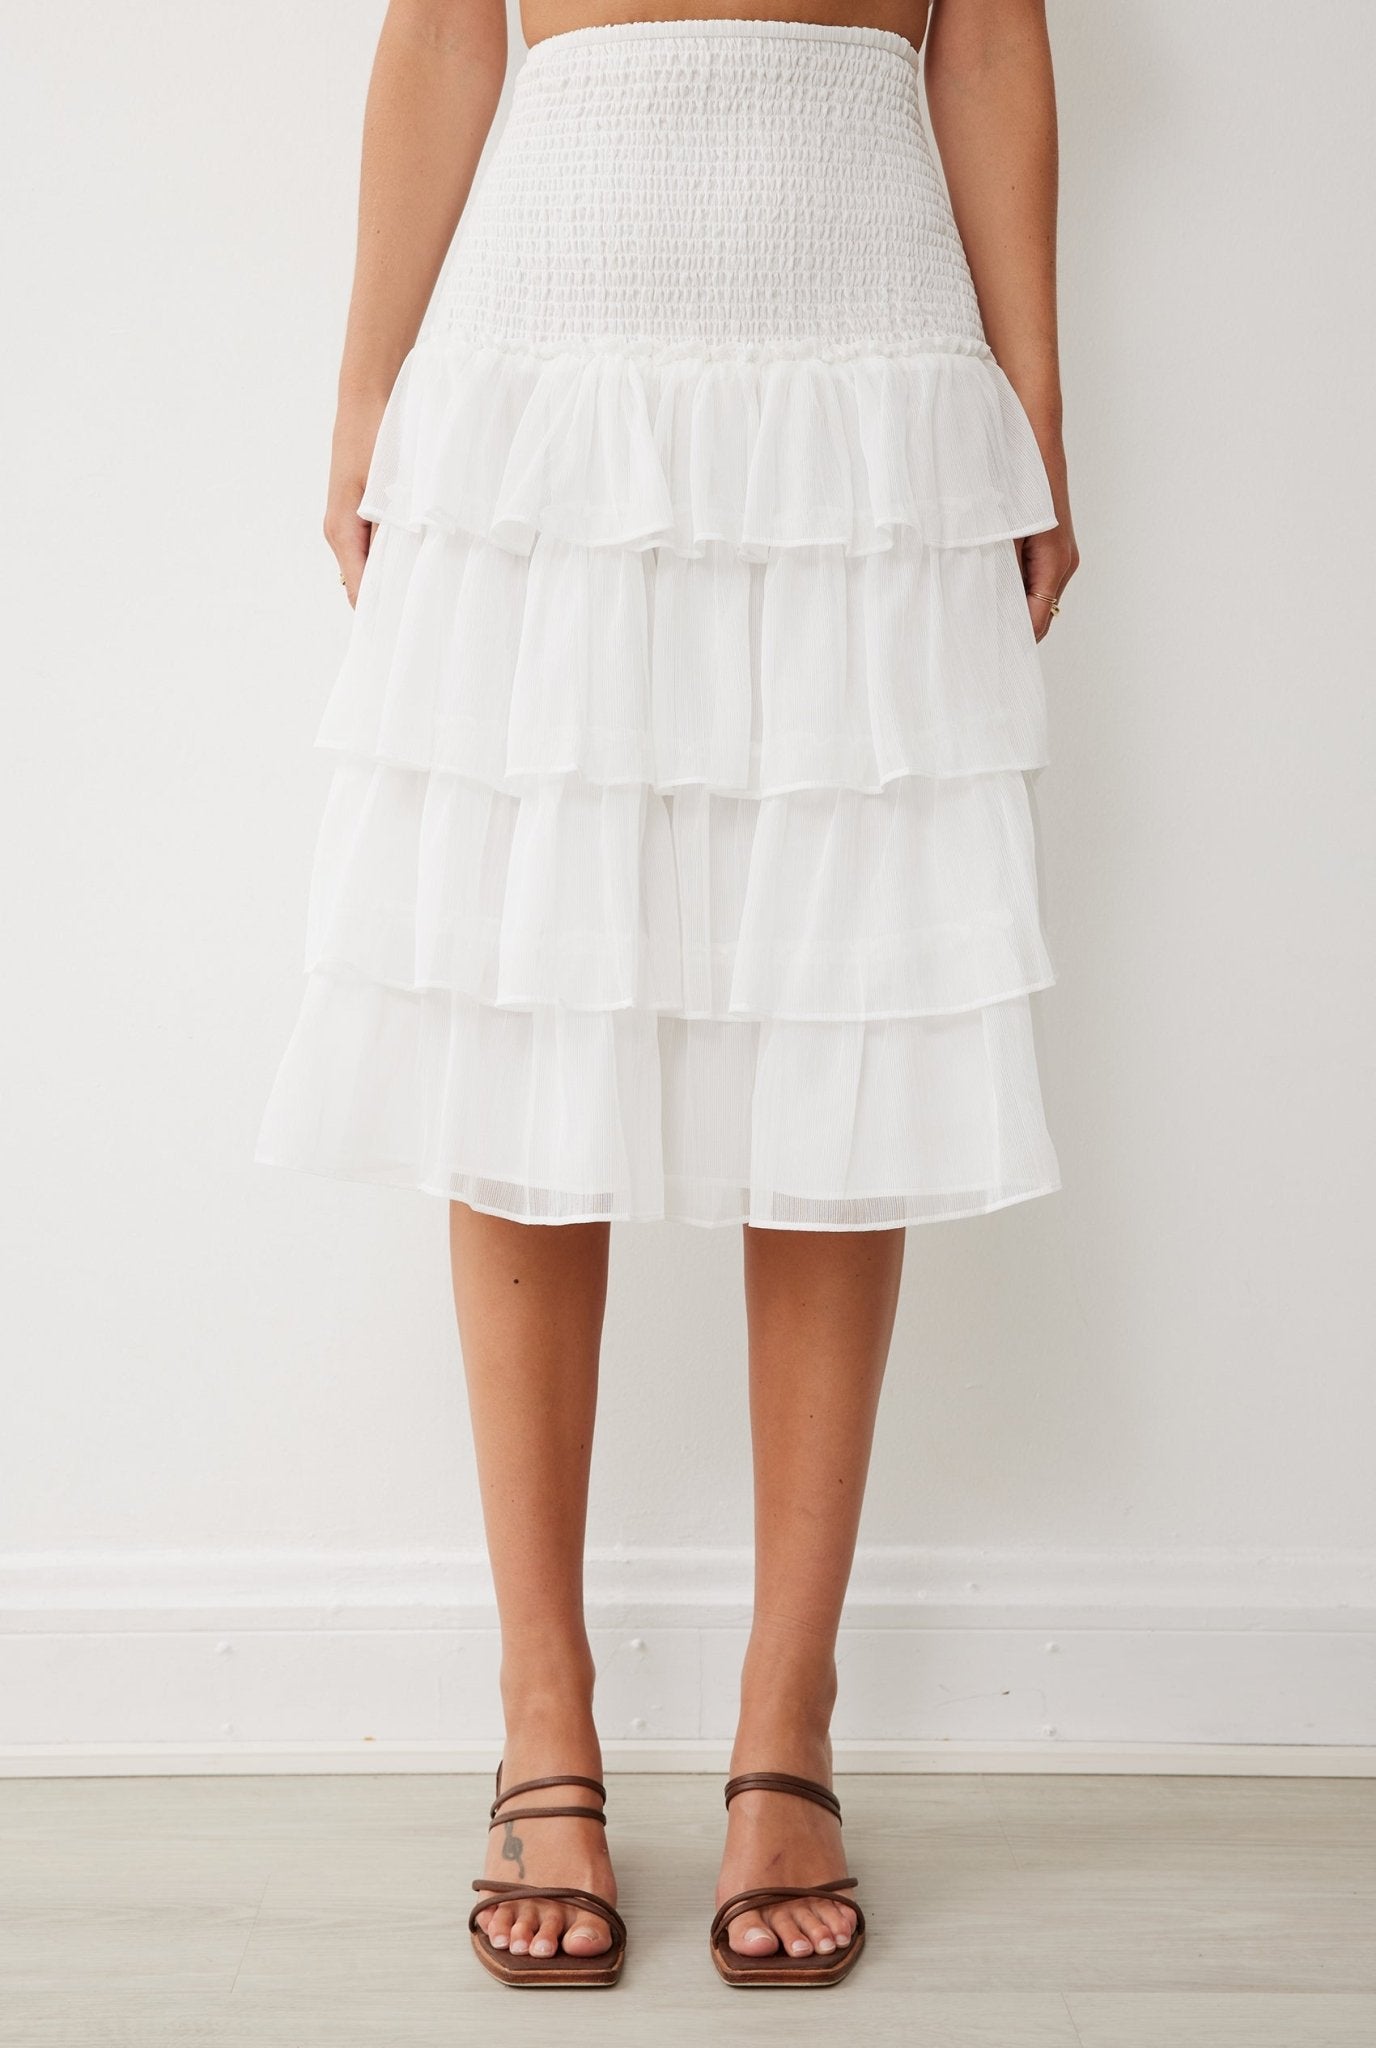 Dallas Skirt in White